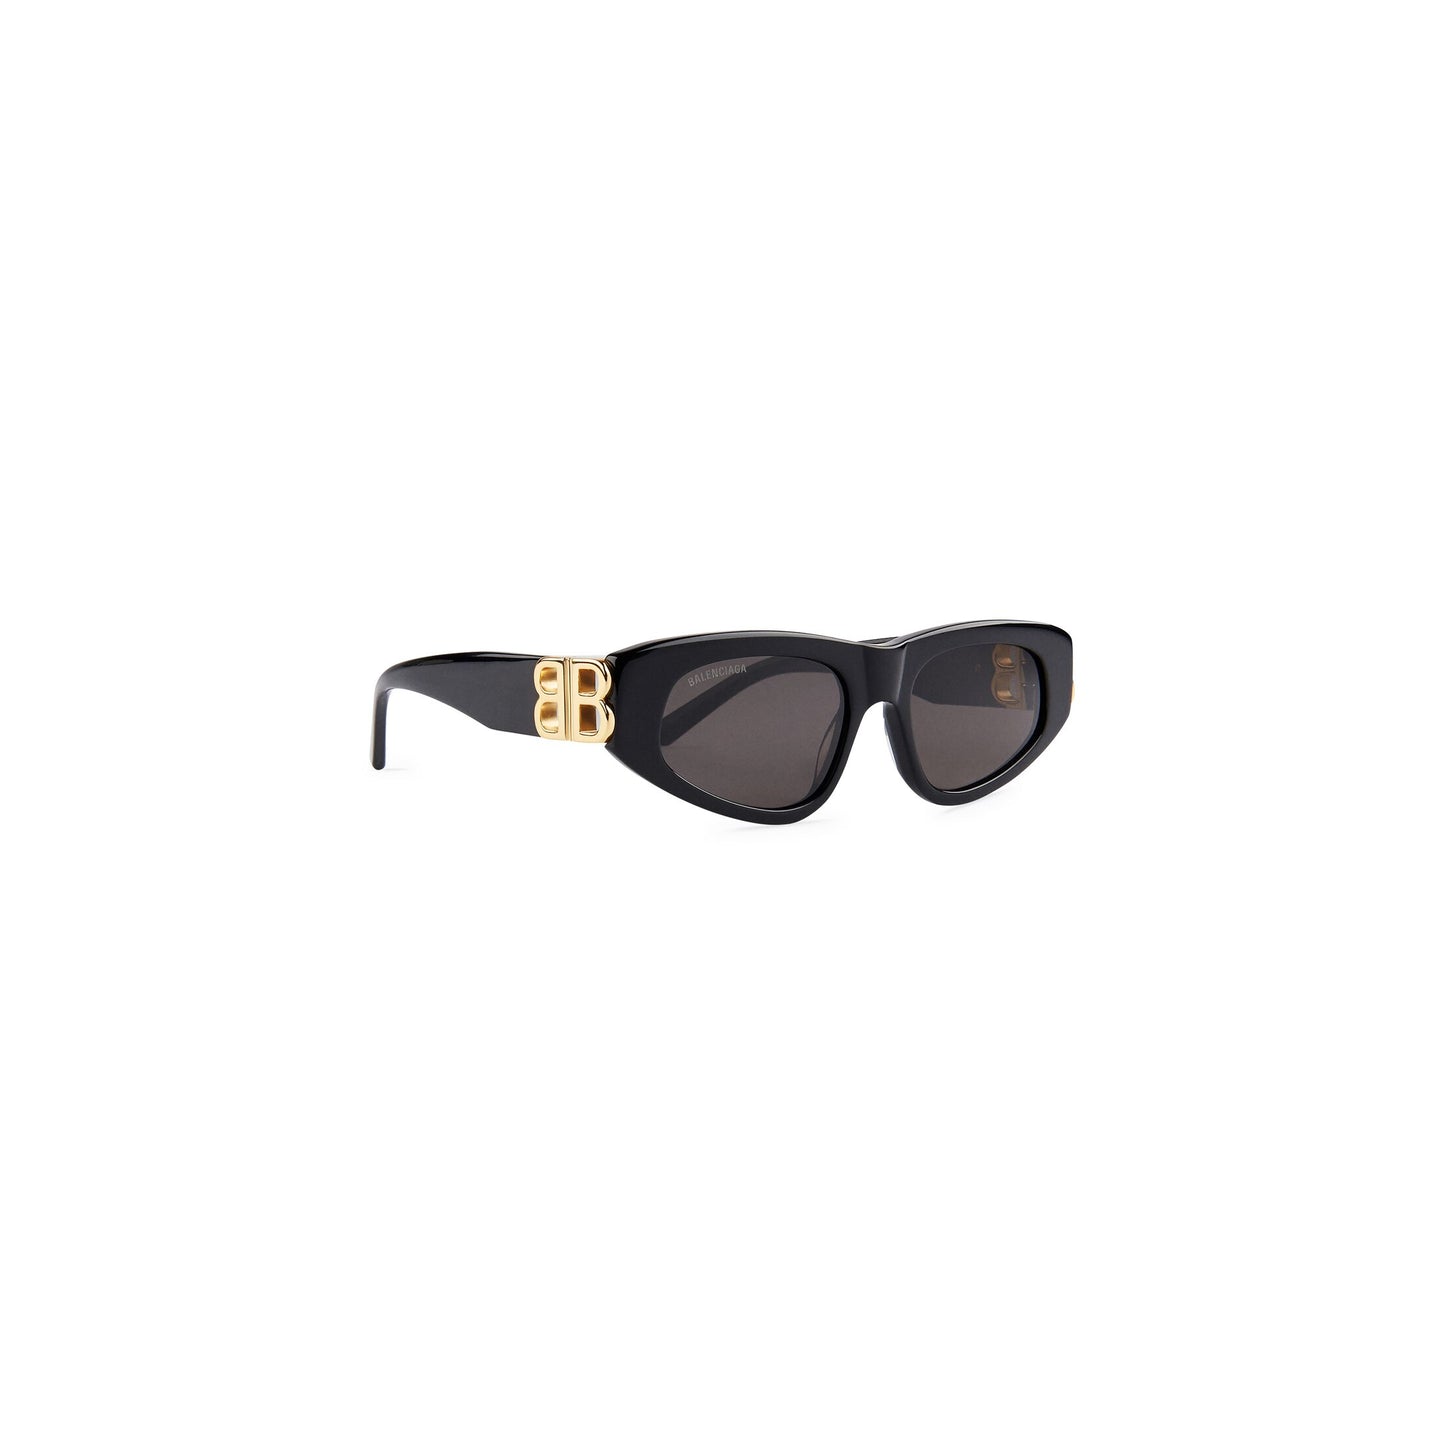 Dynasty D-frame Sunglasses - Black